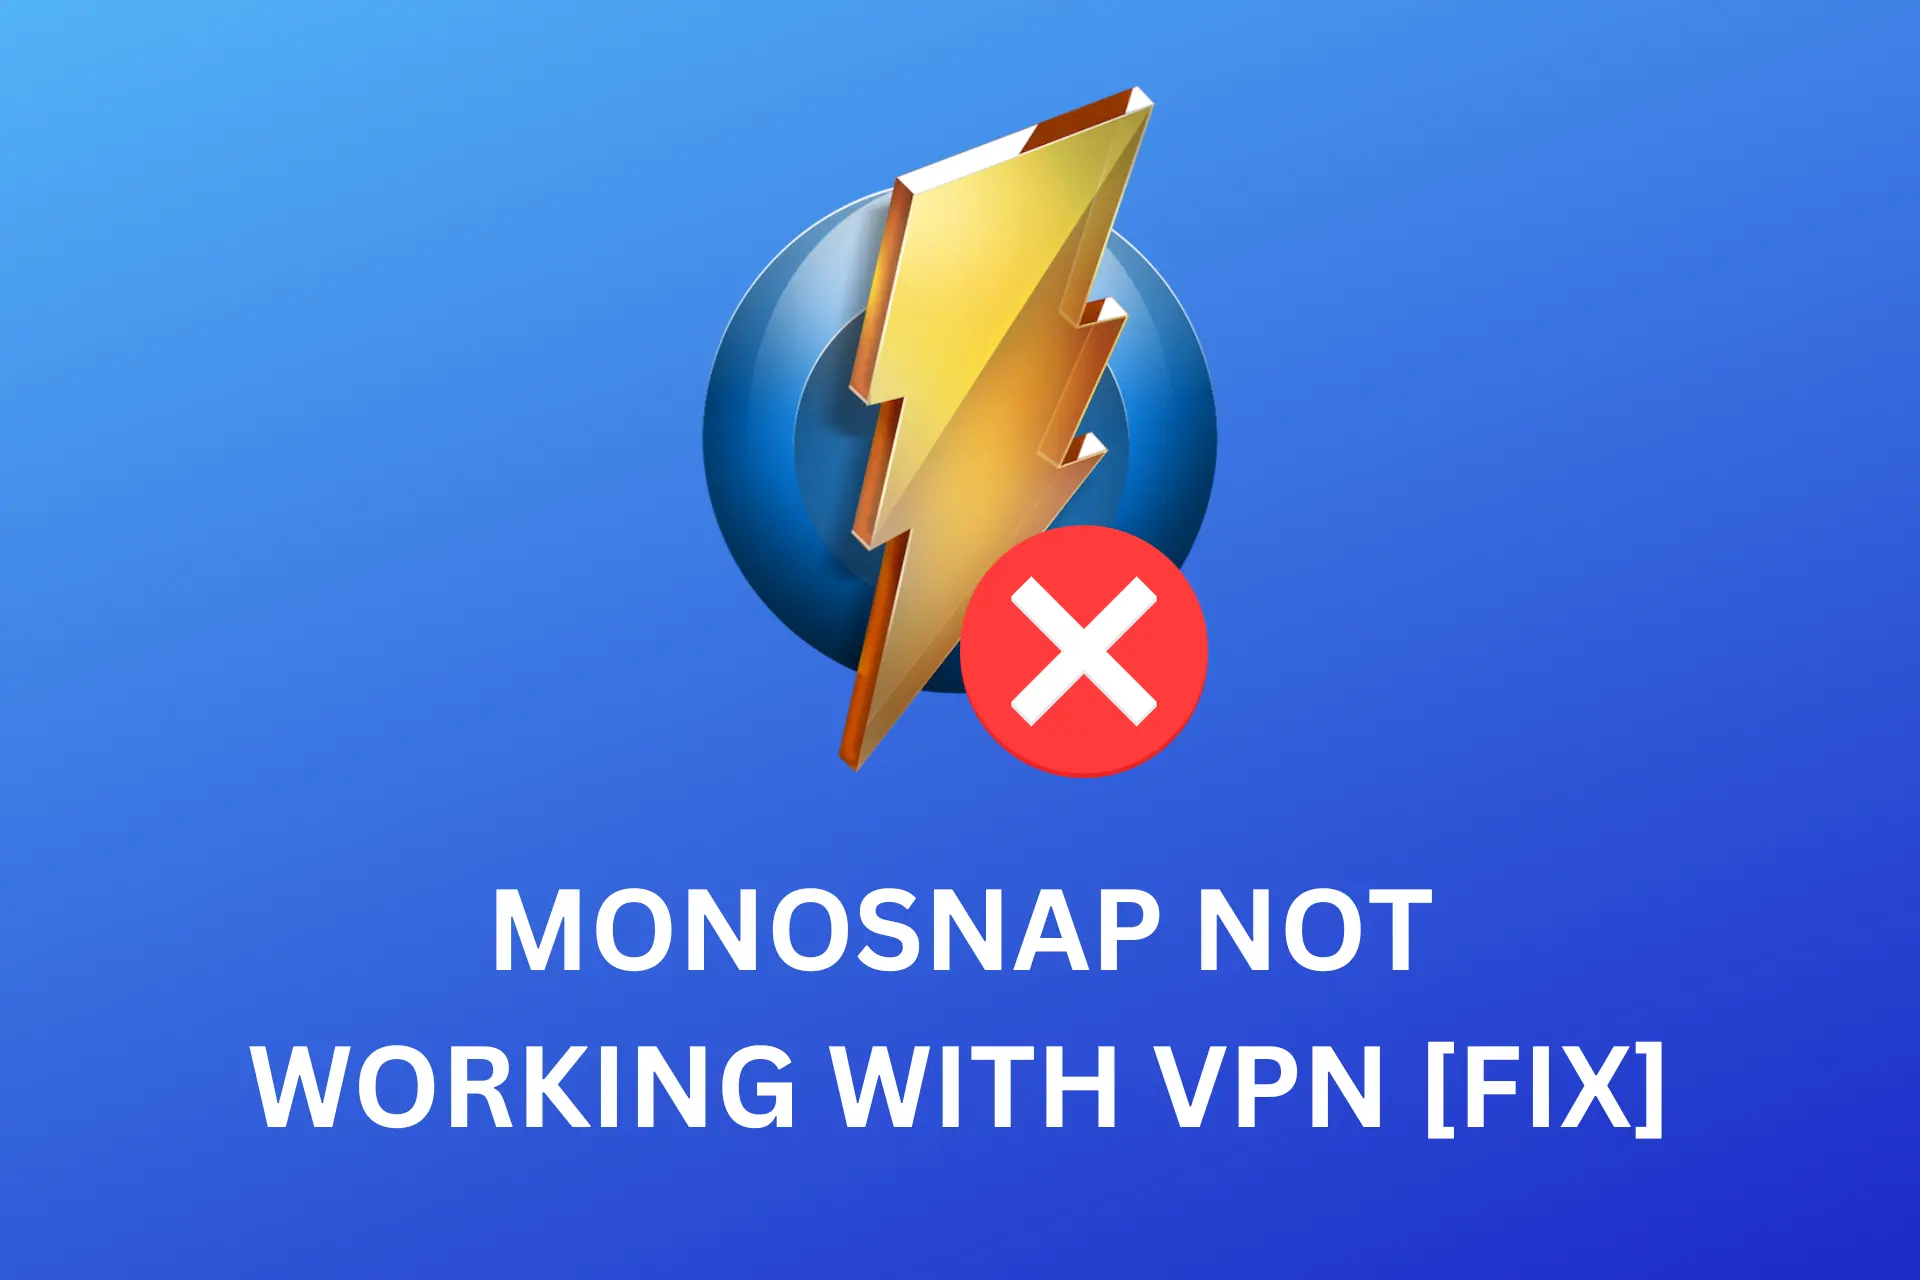 monosnap not working with vpn